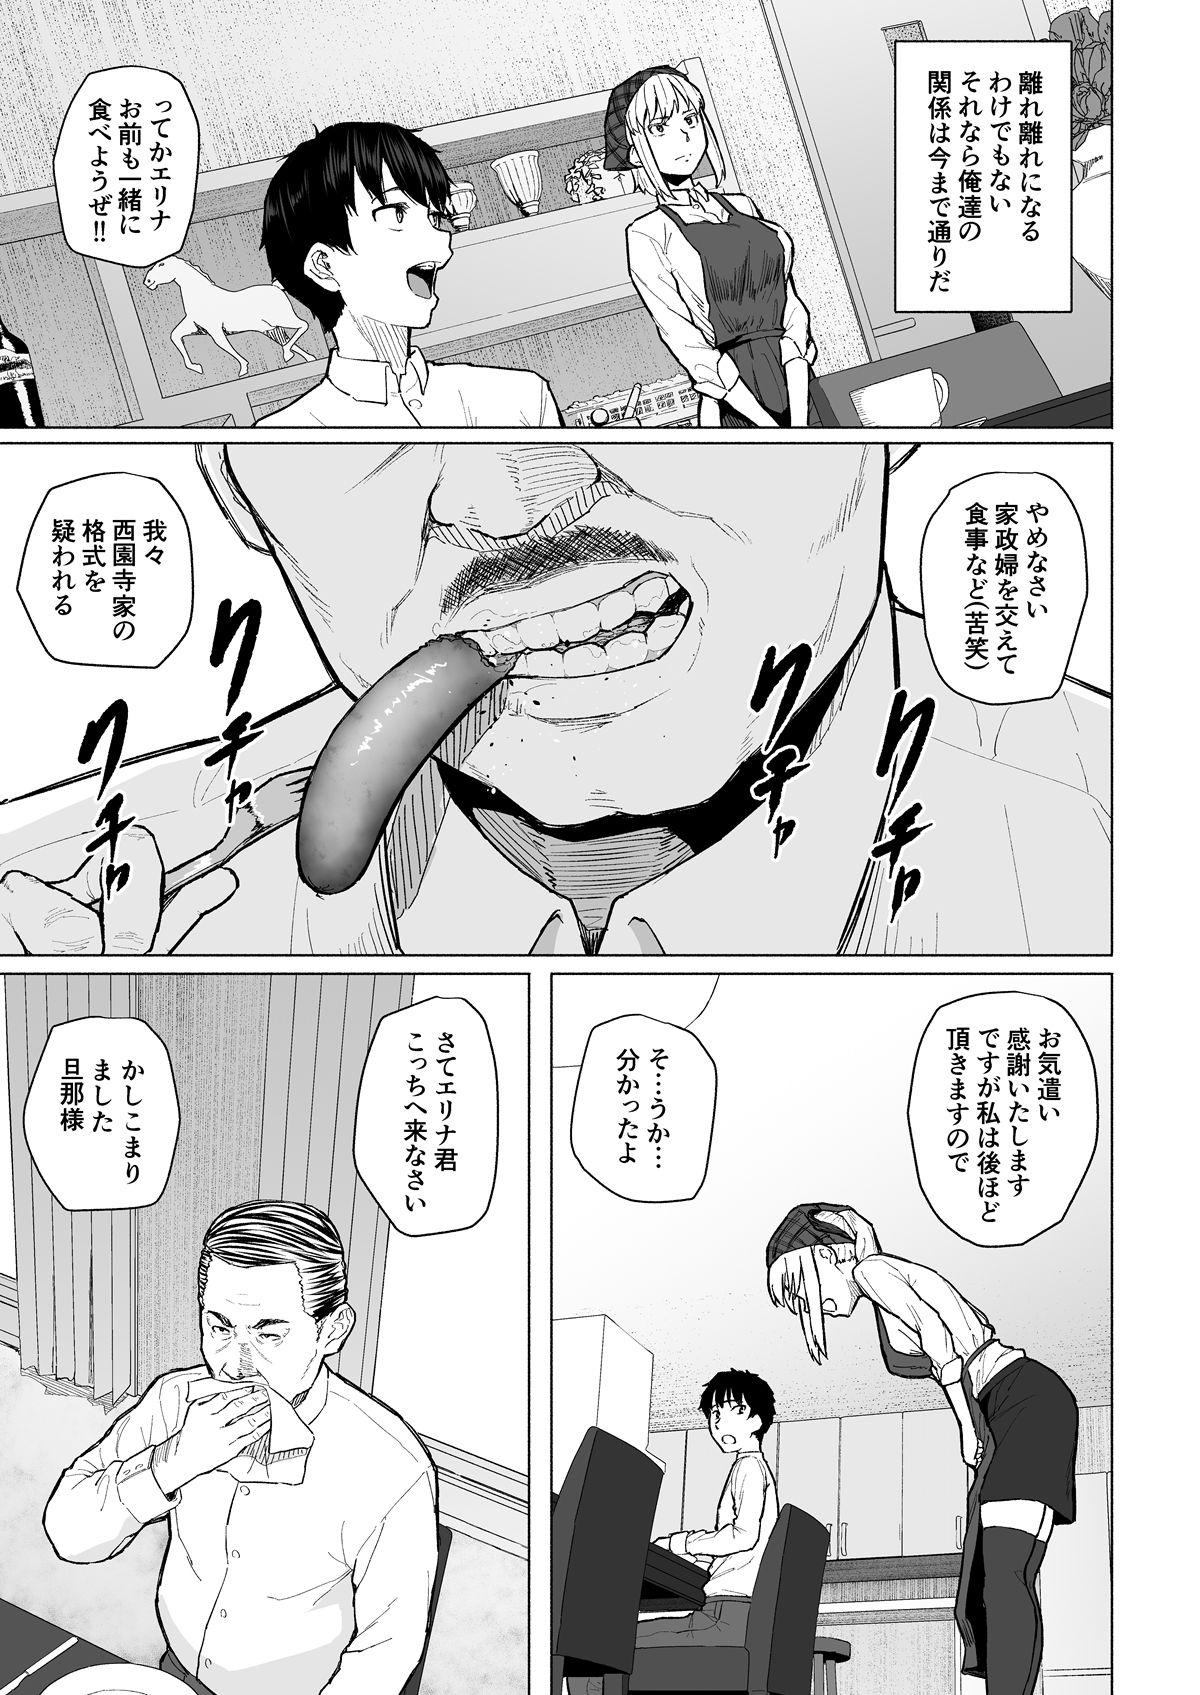 Stream Botsu ni Shita Ero Manga 2 Project aborted Webcamchat - Page 4